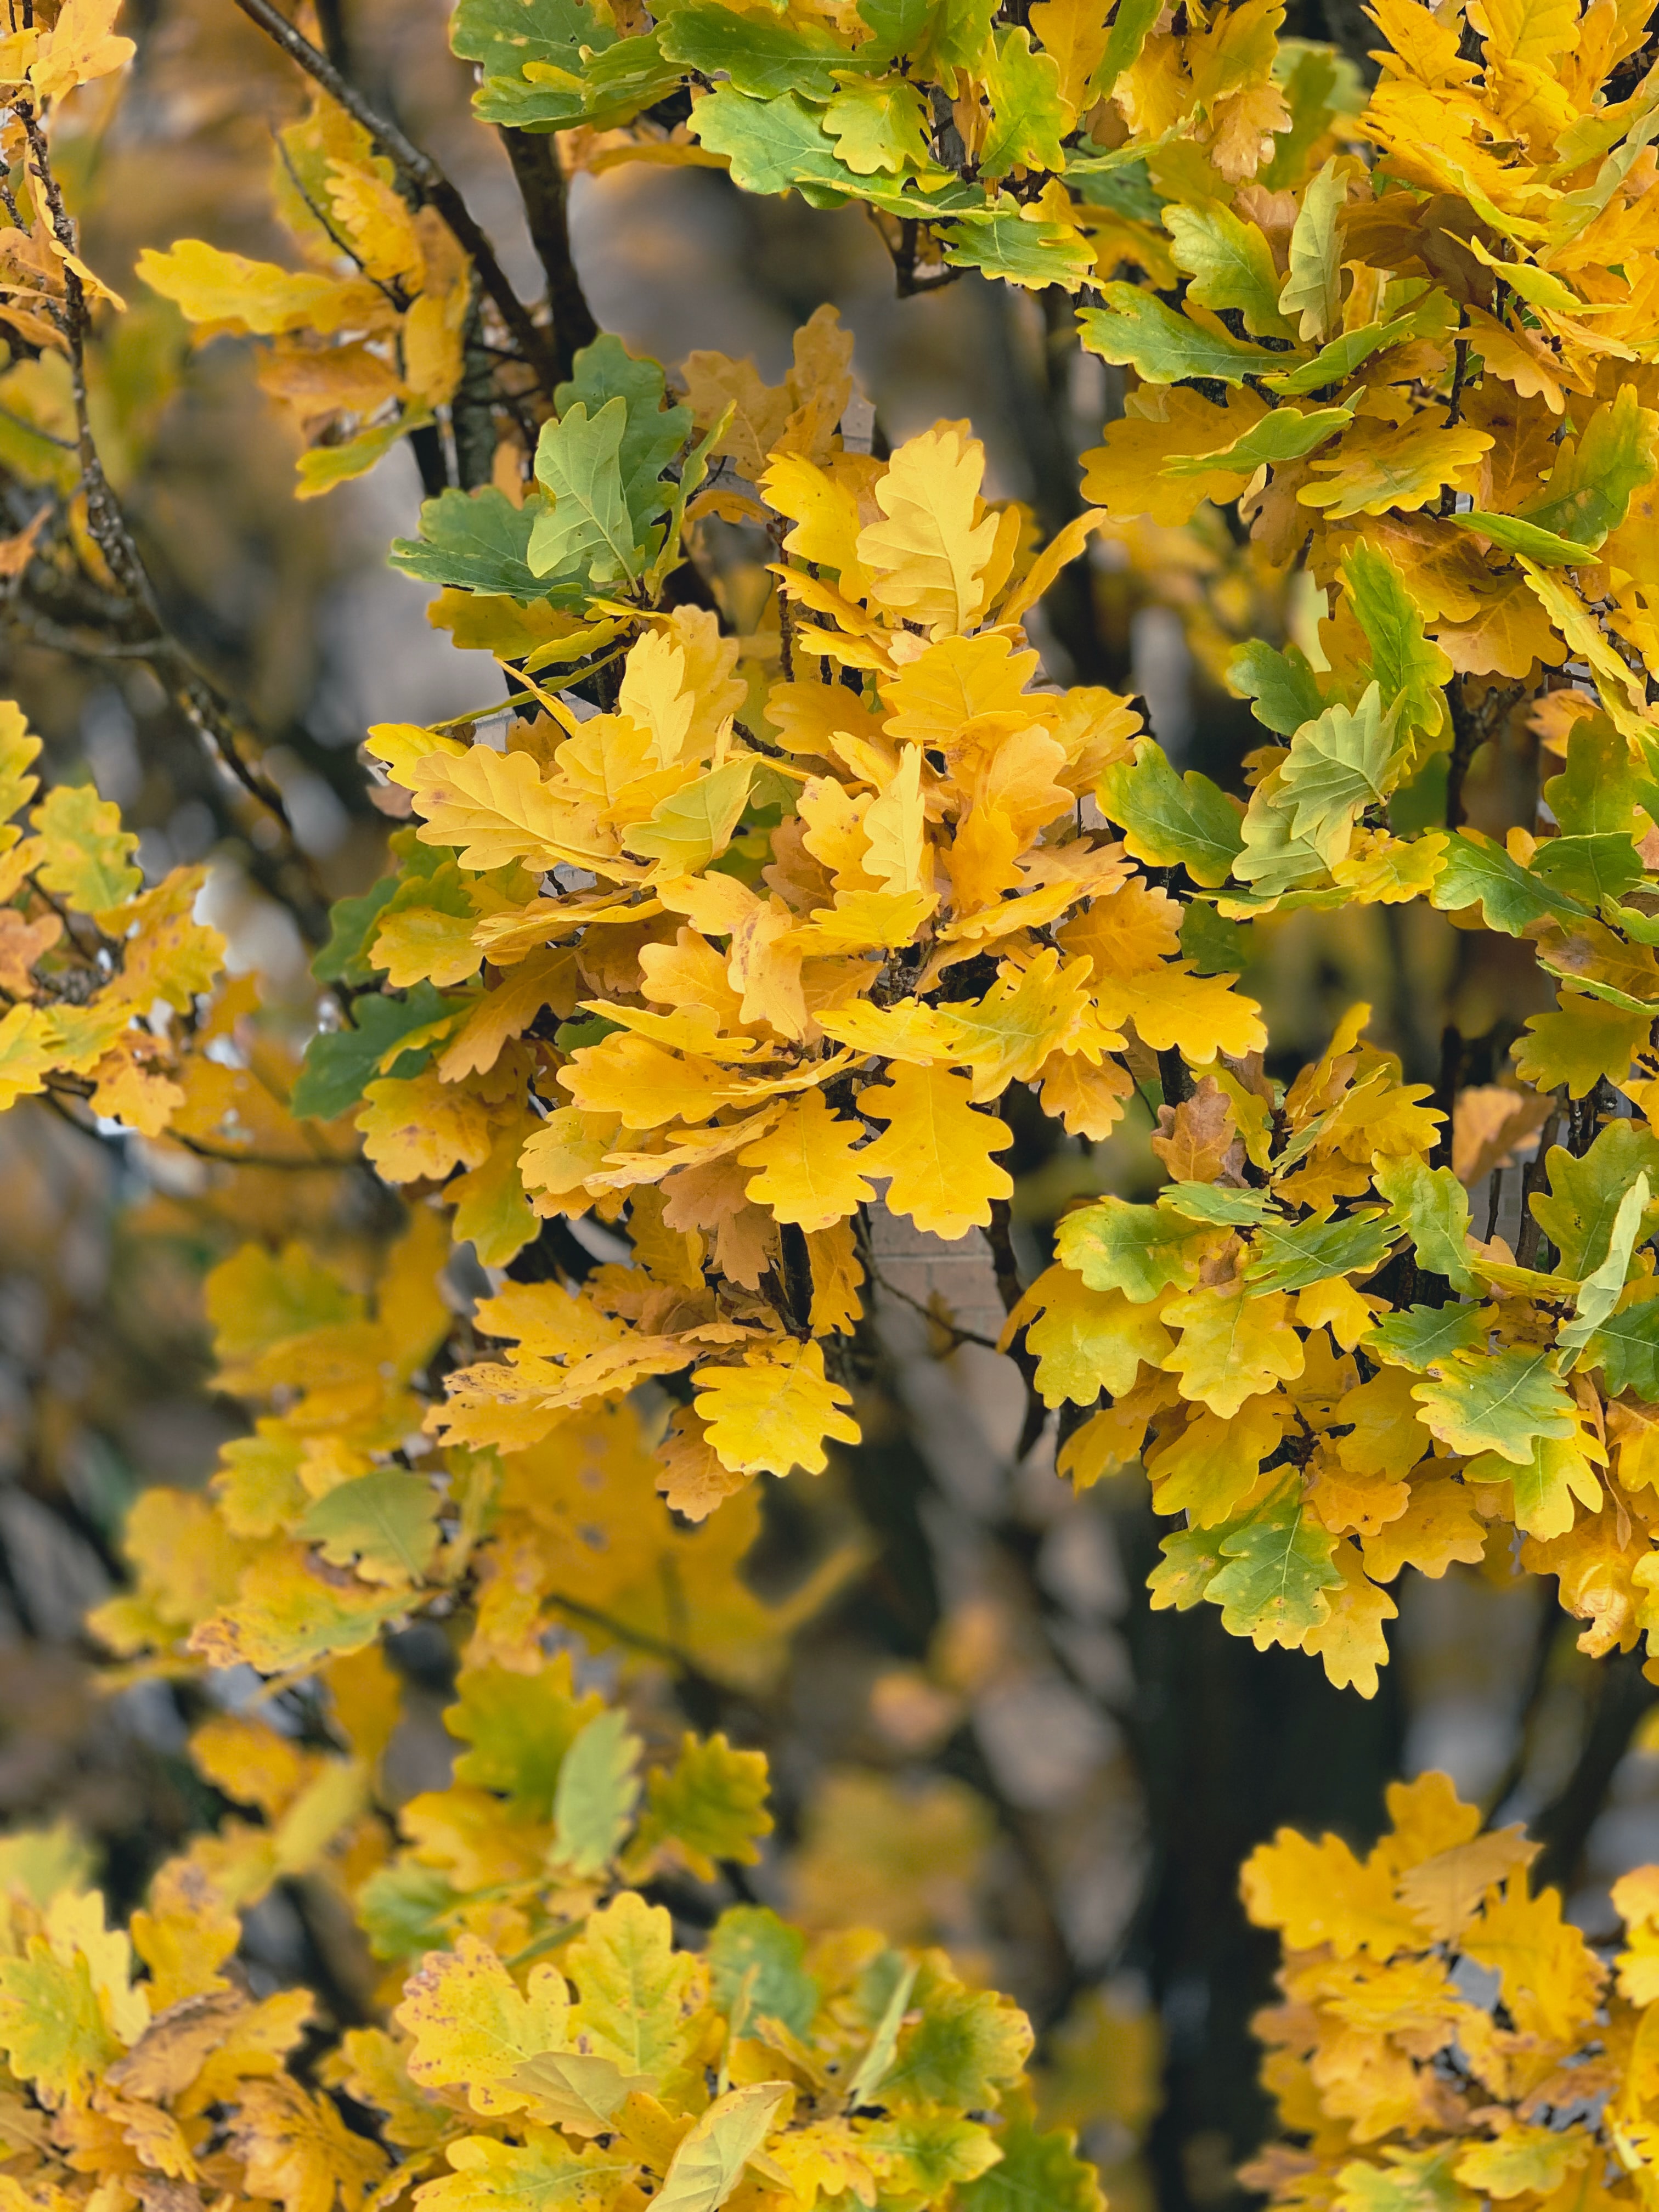 Helpful Tips for Tree Leaf Identification